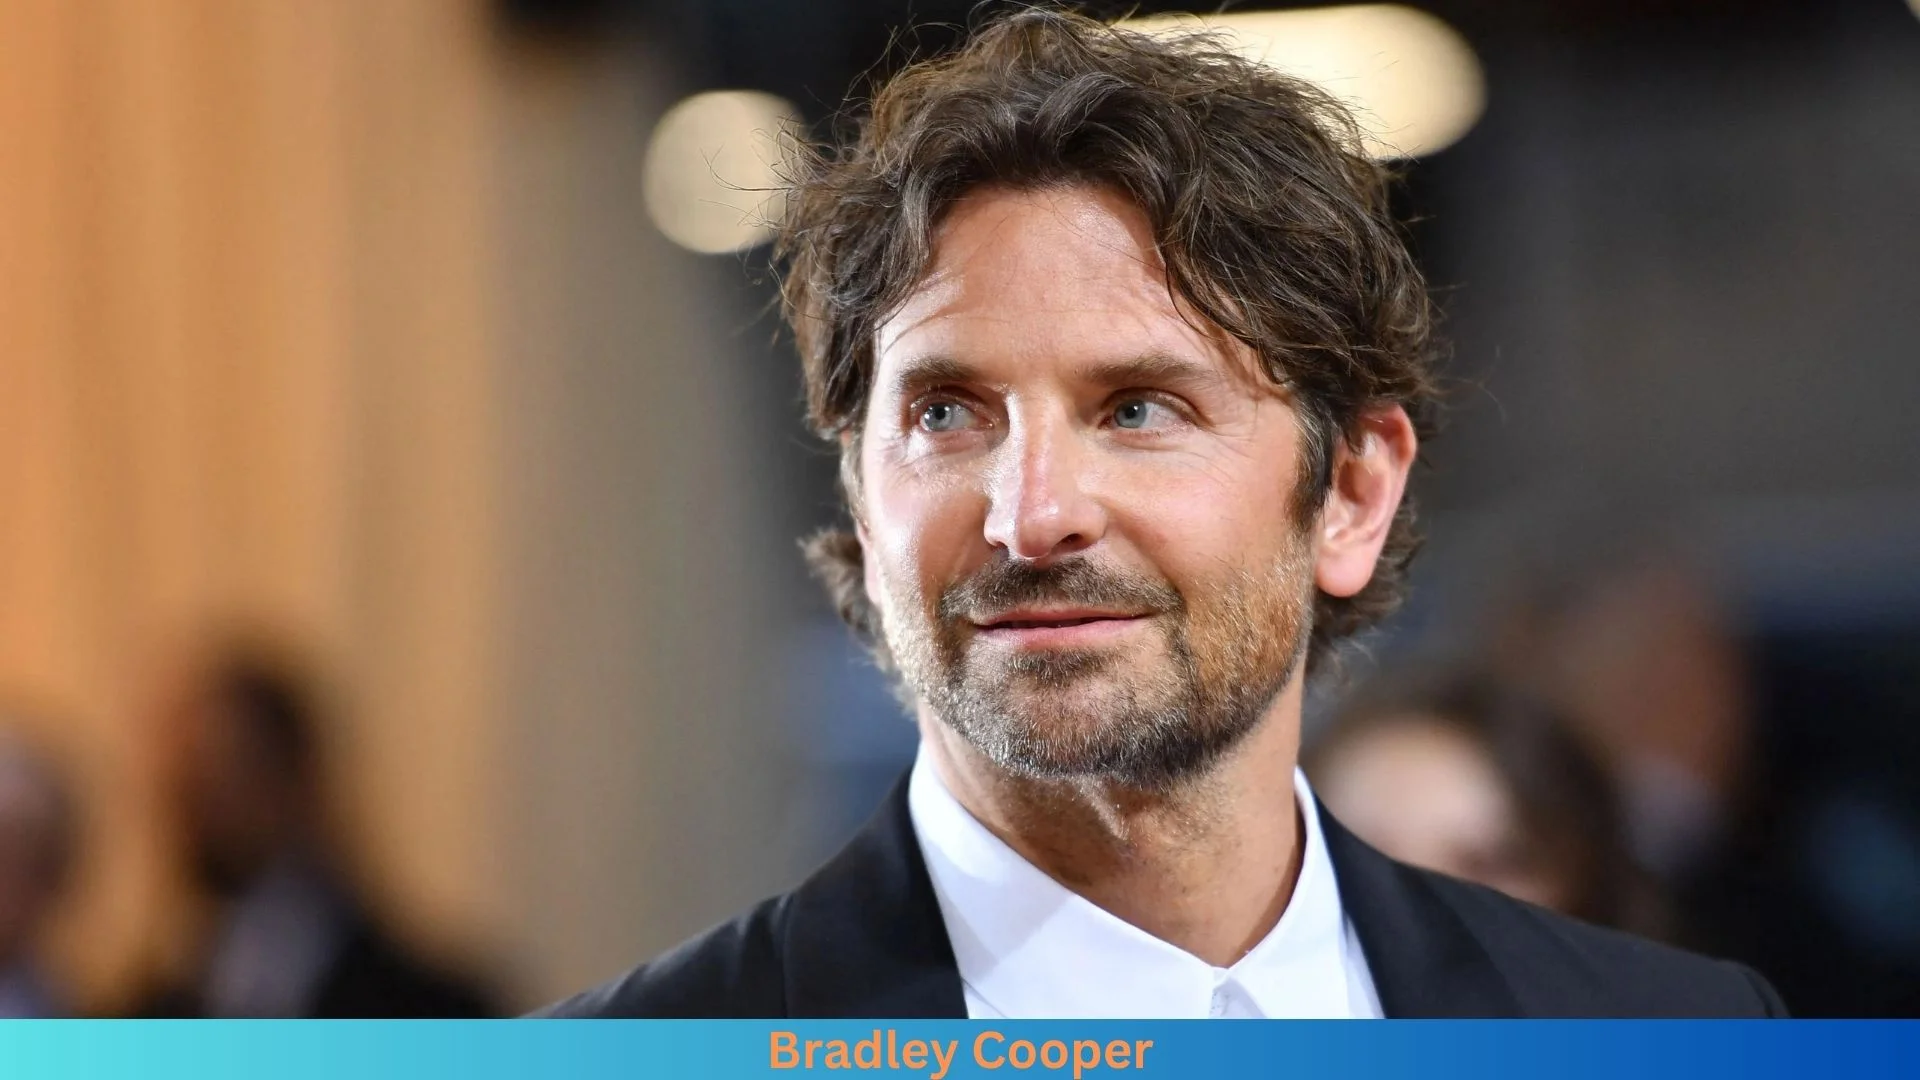 Net Worth of Bradley Cooper